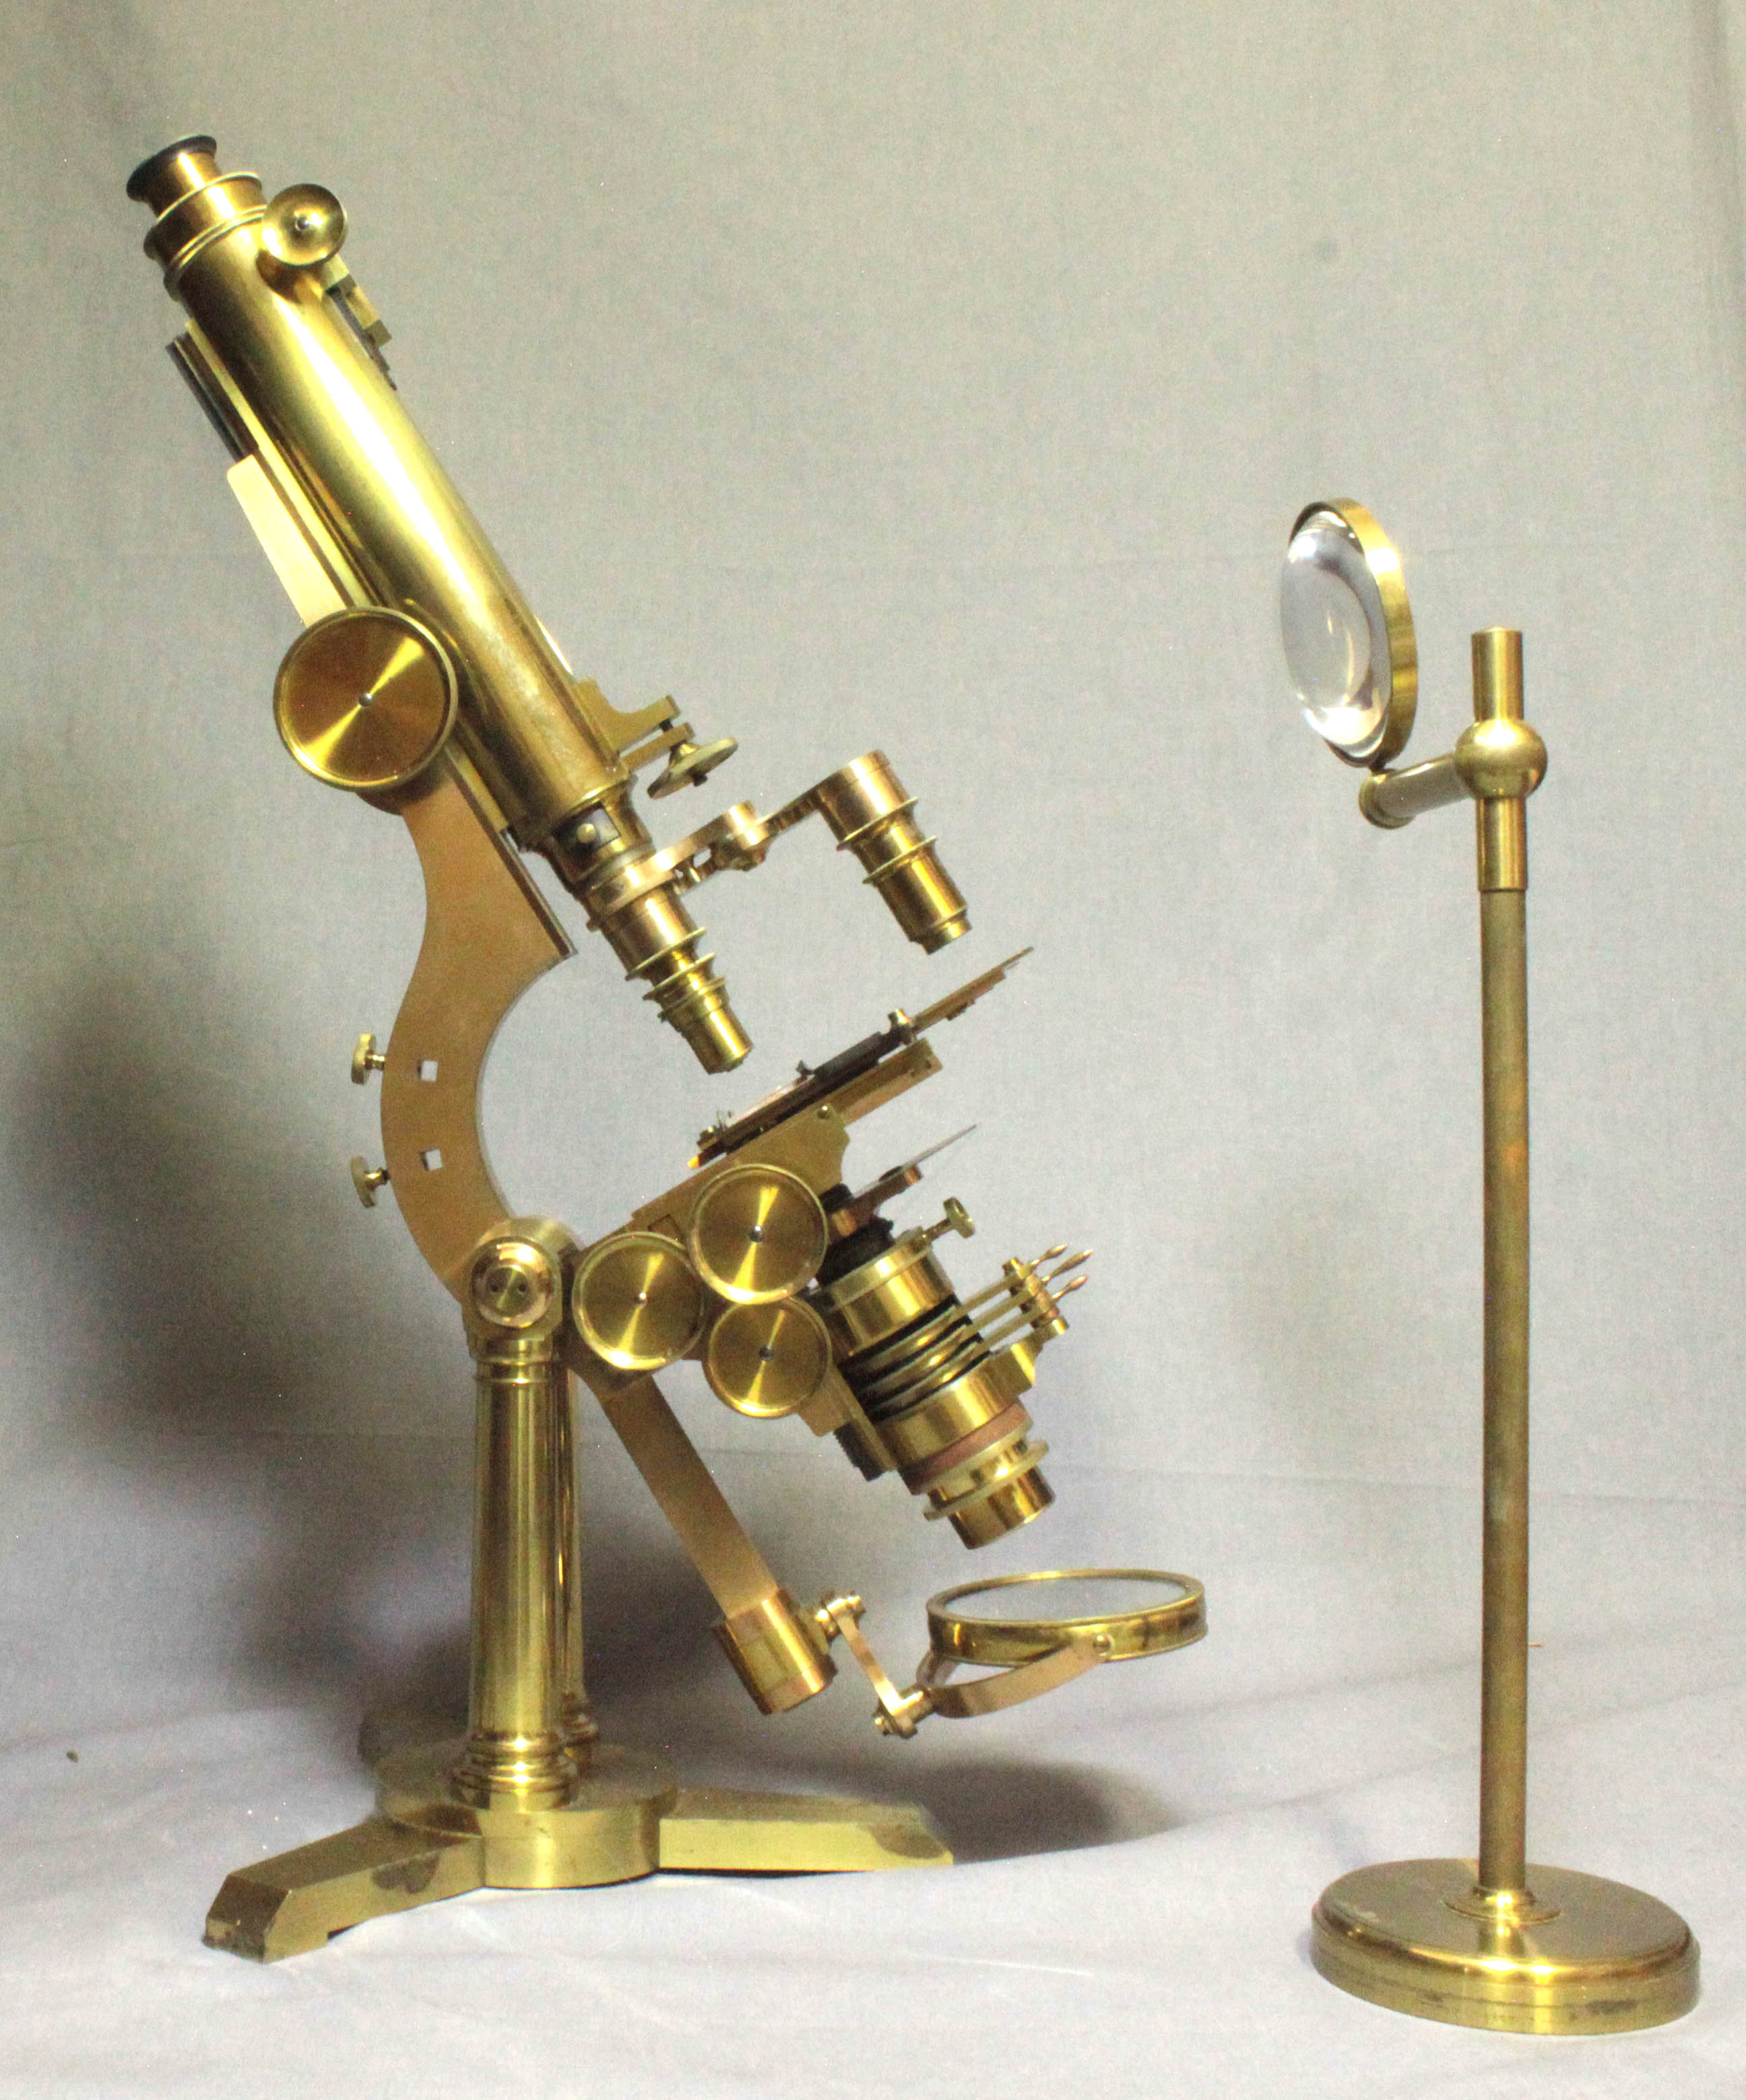 Smith Beck Best Microscope